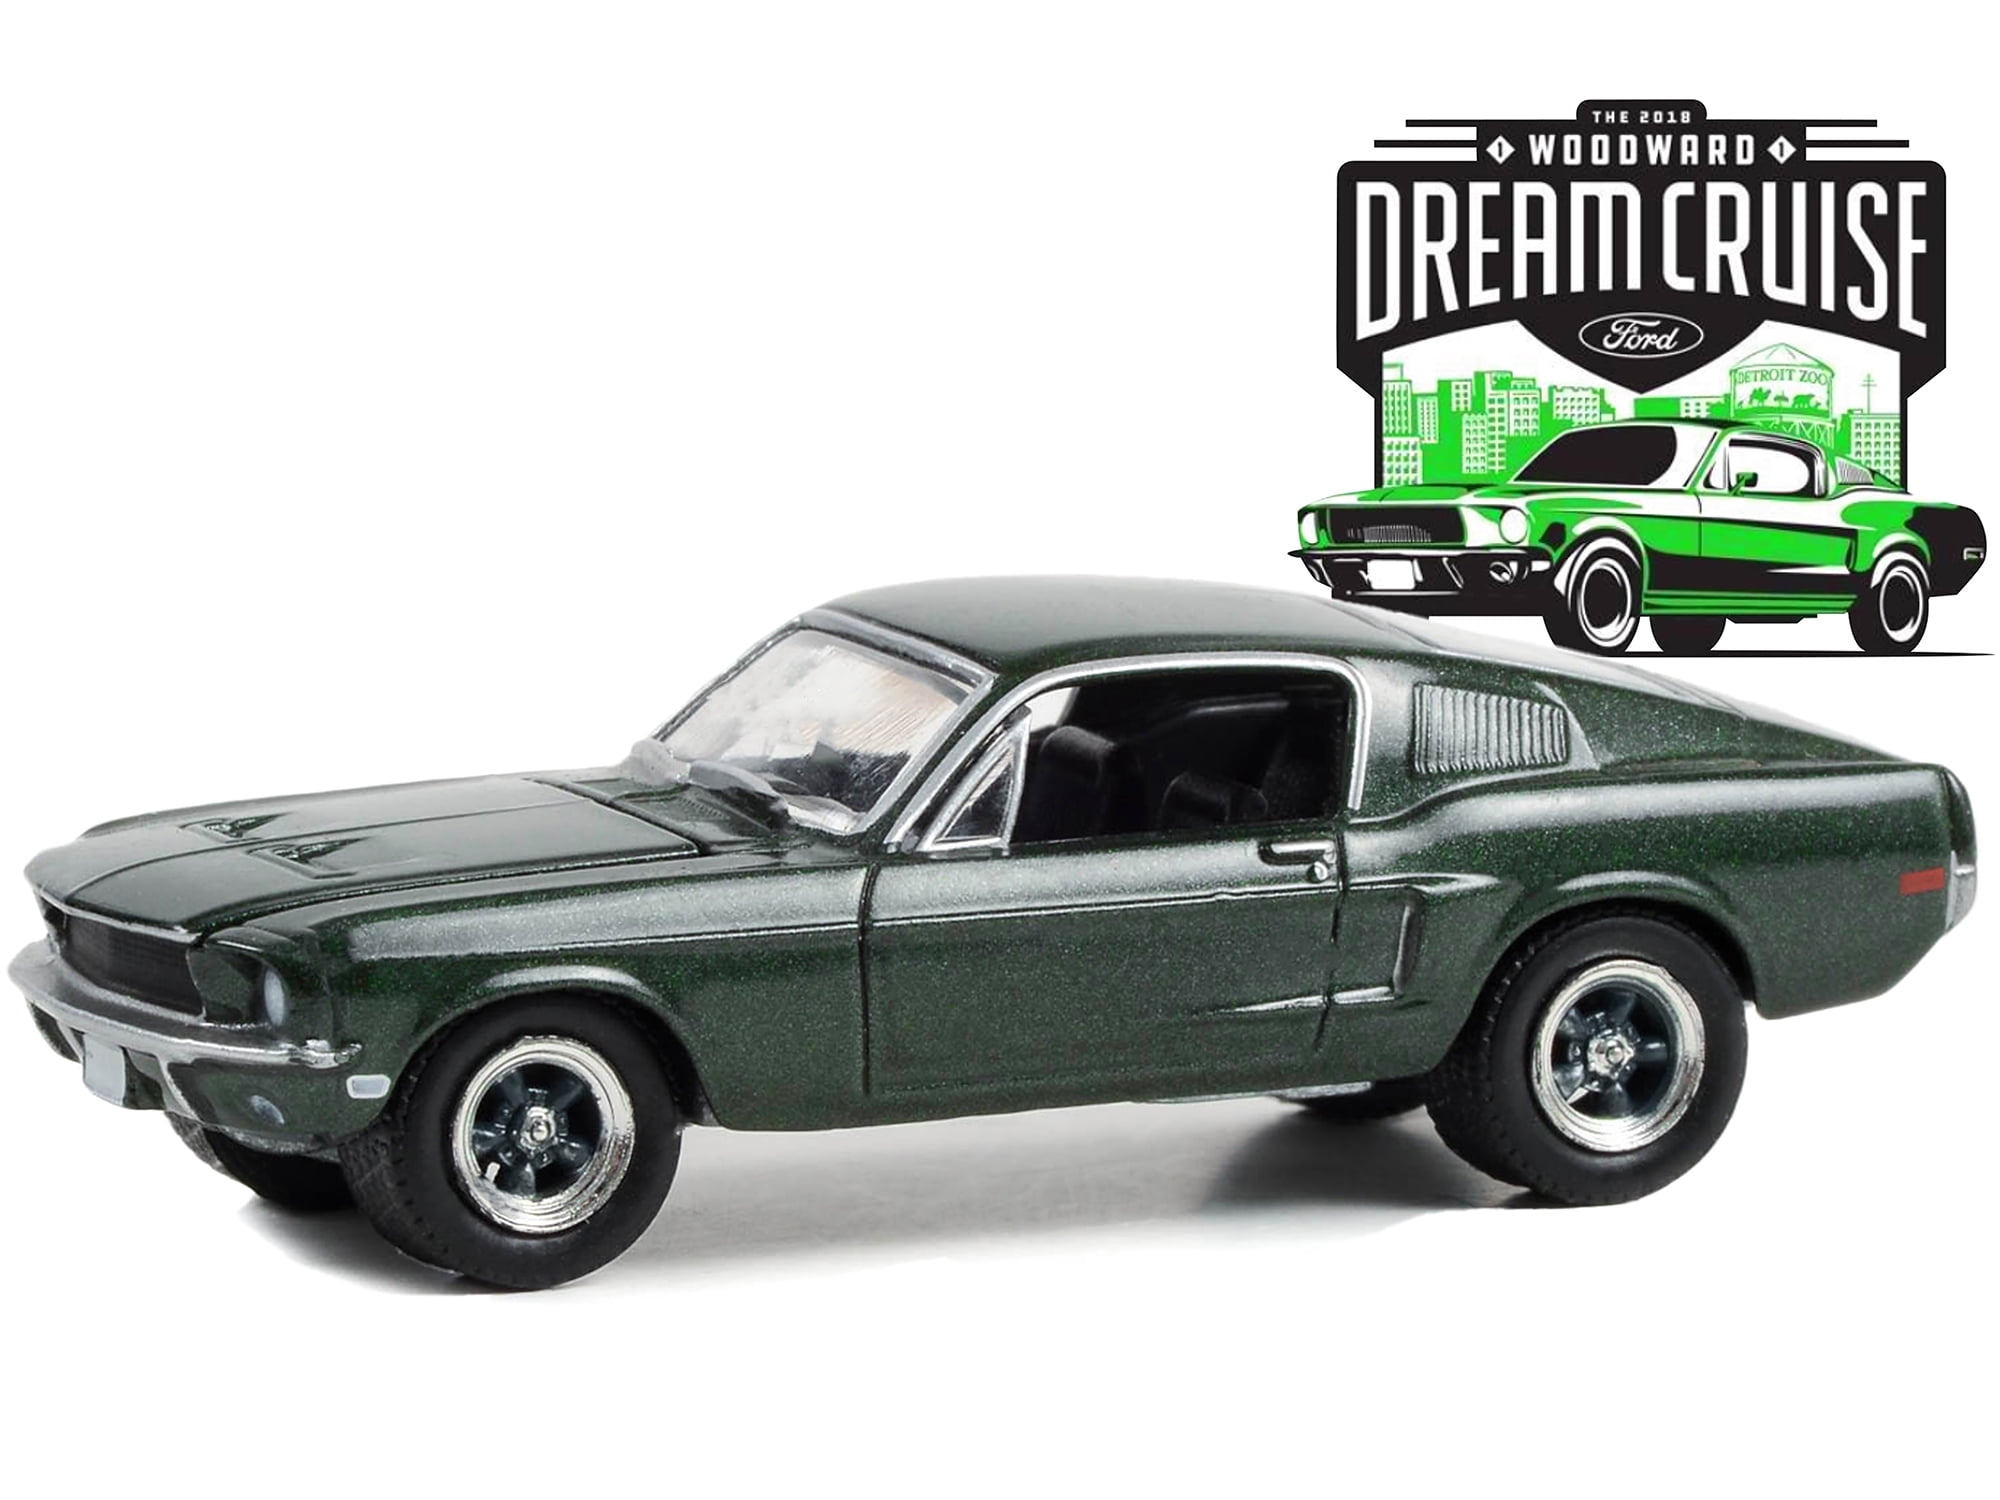 FORD Mustang GT Fastback 1968 Vert de la série WOODWARD DREAM